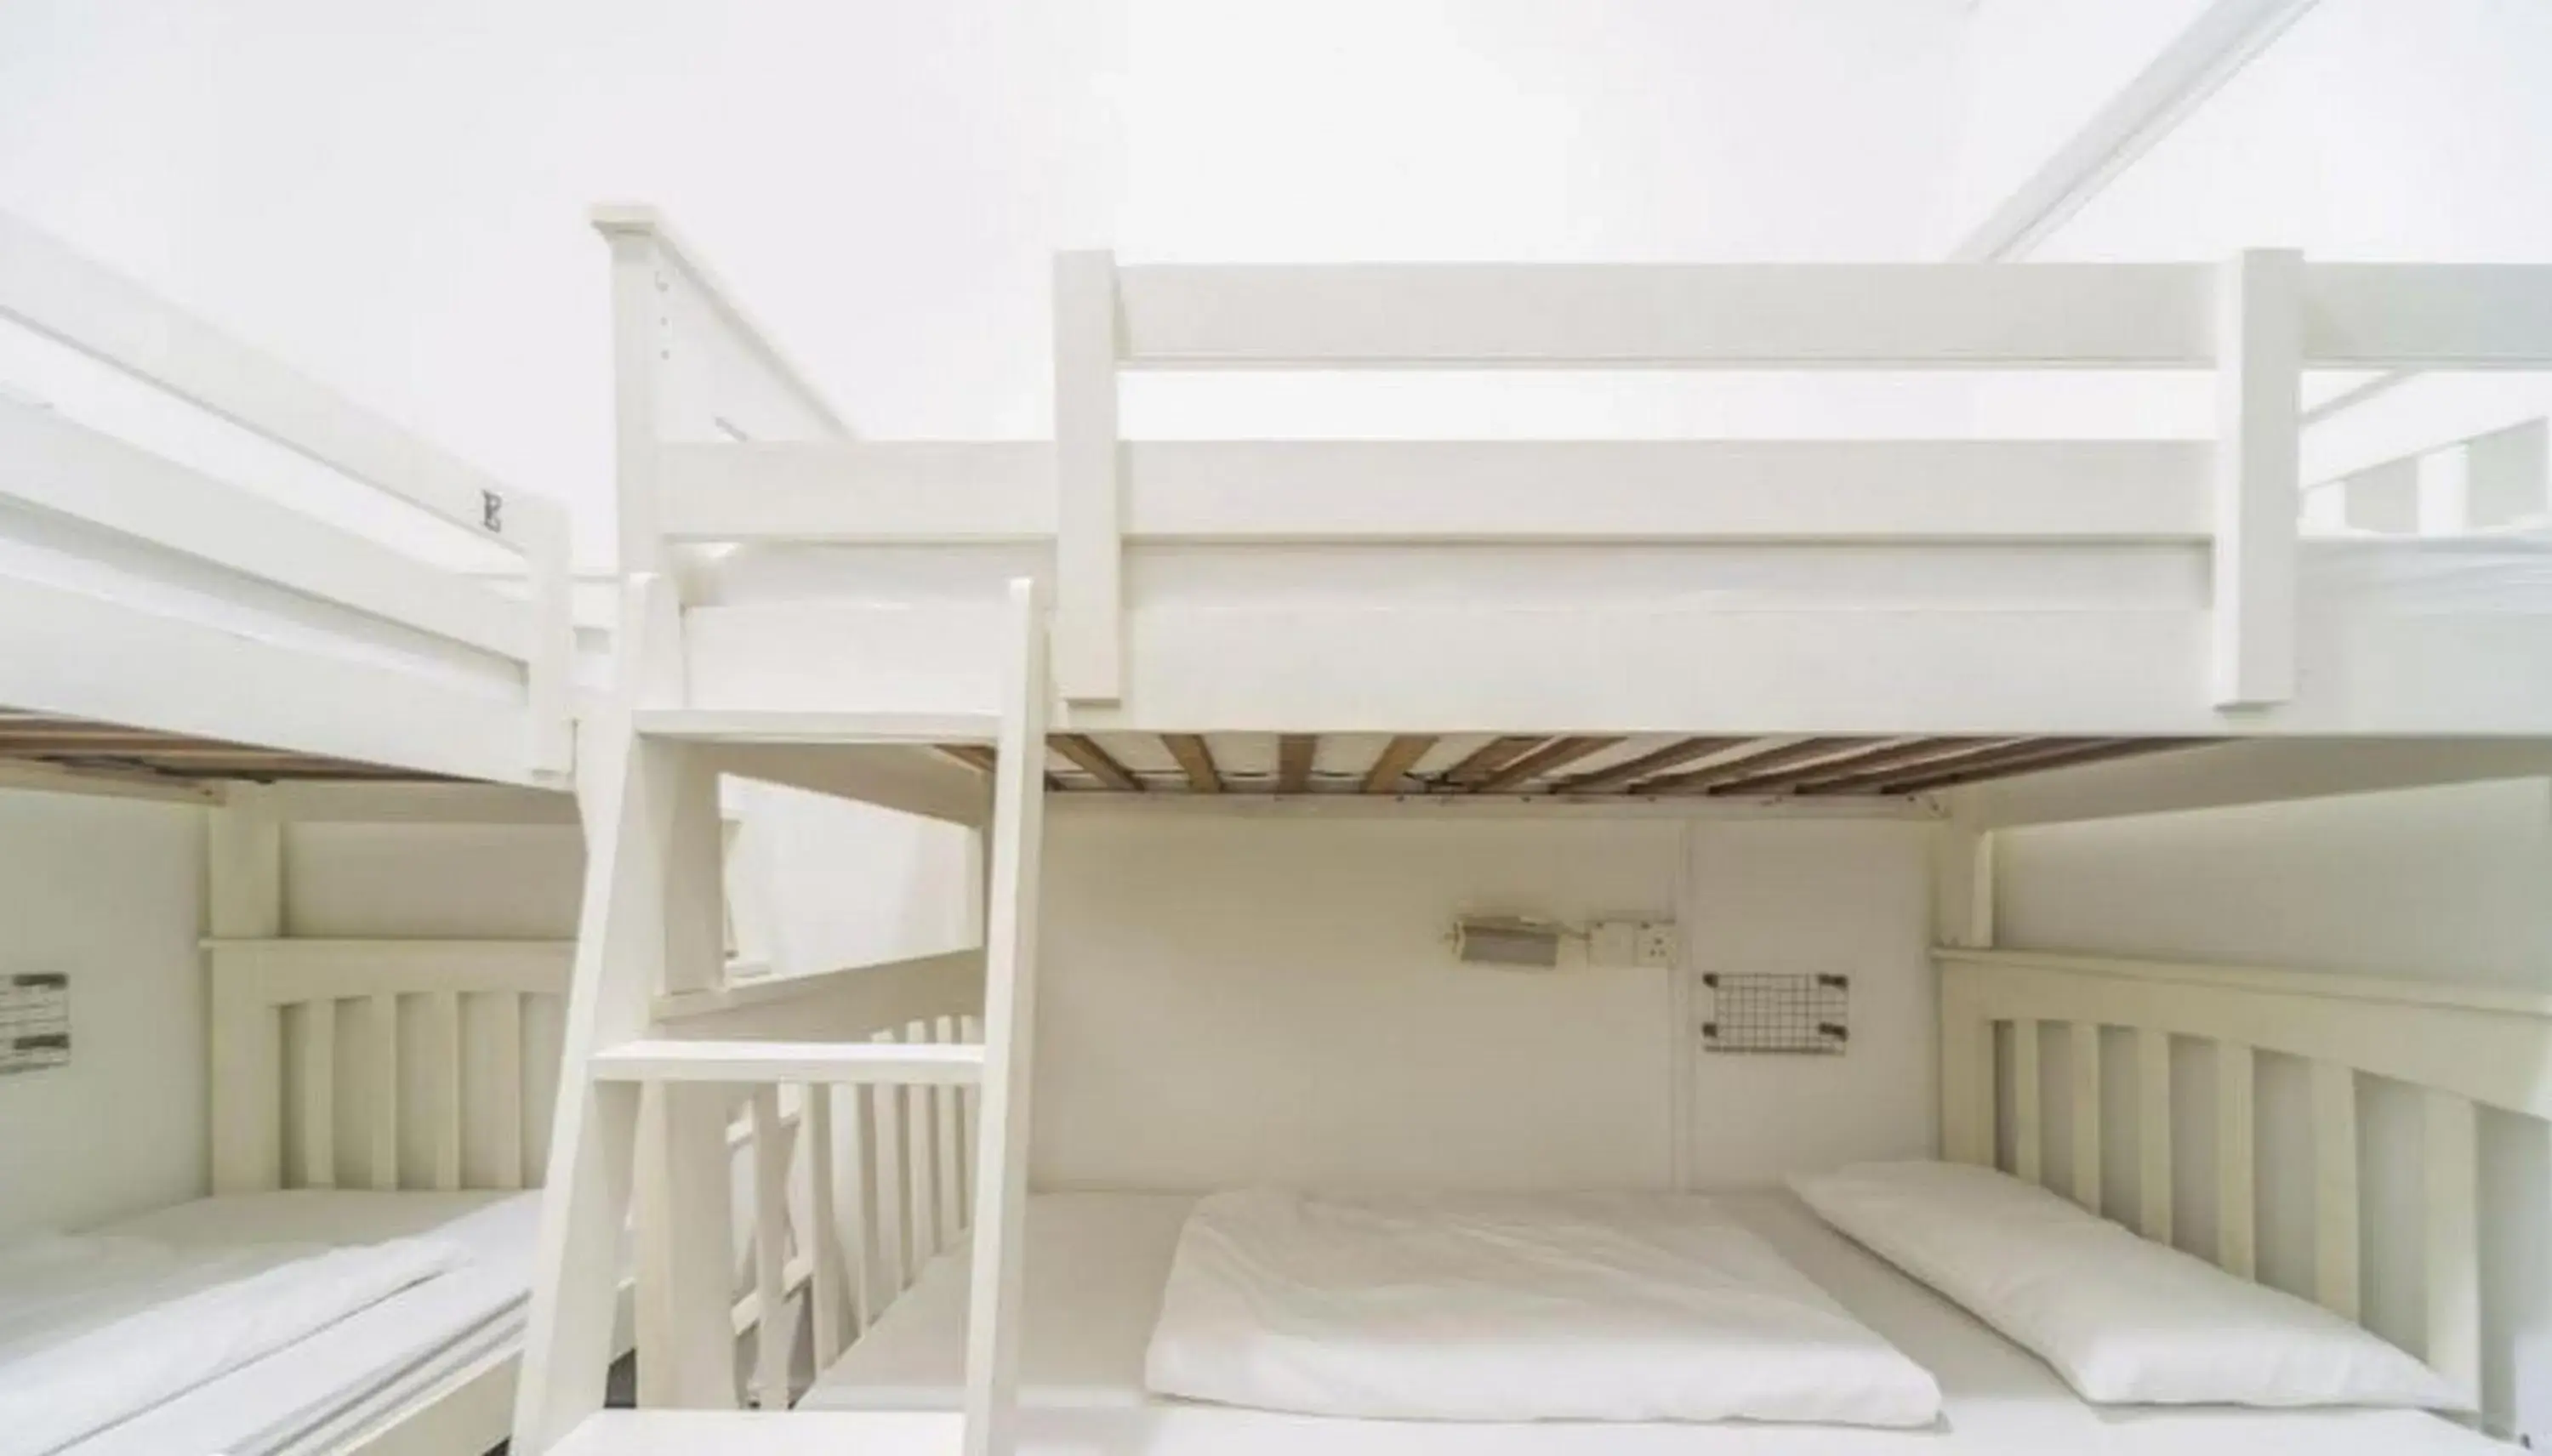 Bunk Bed in iStay.inn - an urban art hostel